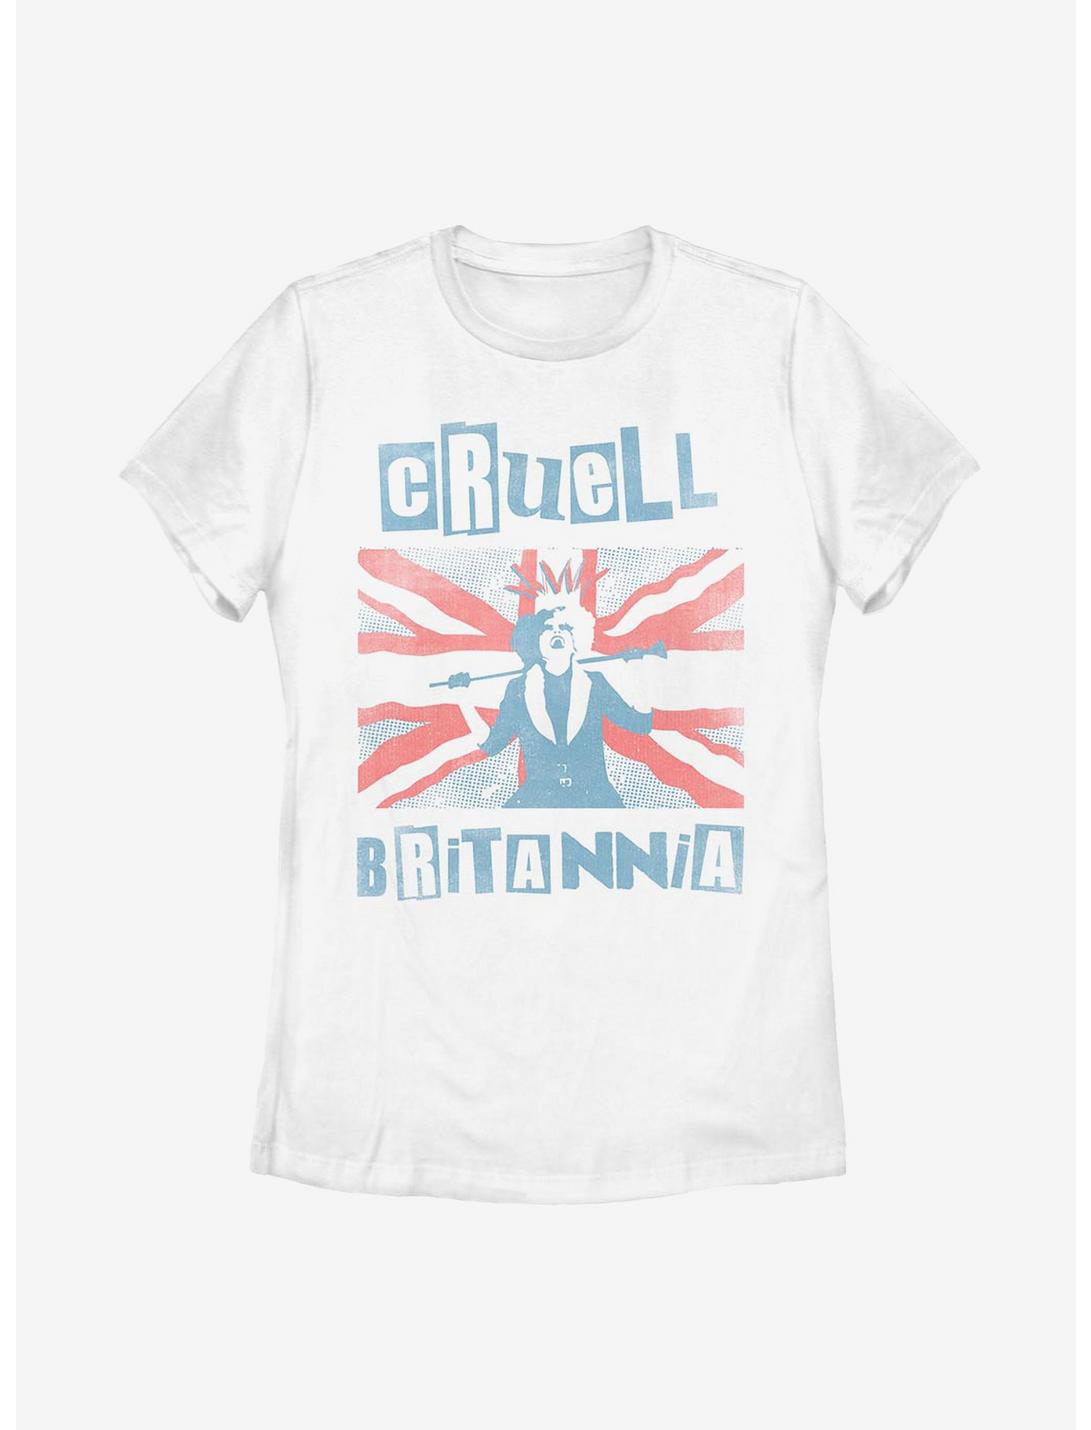 Disney Cruella Britannia Womens T-Shirt, WHITE, hi-res